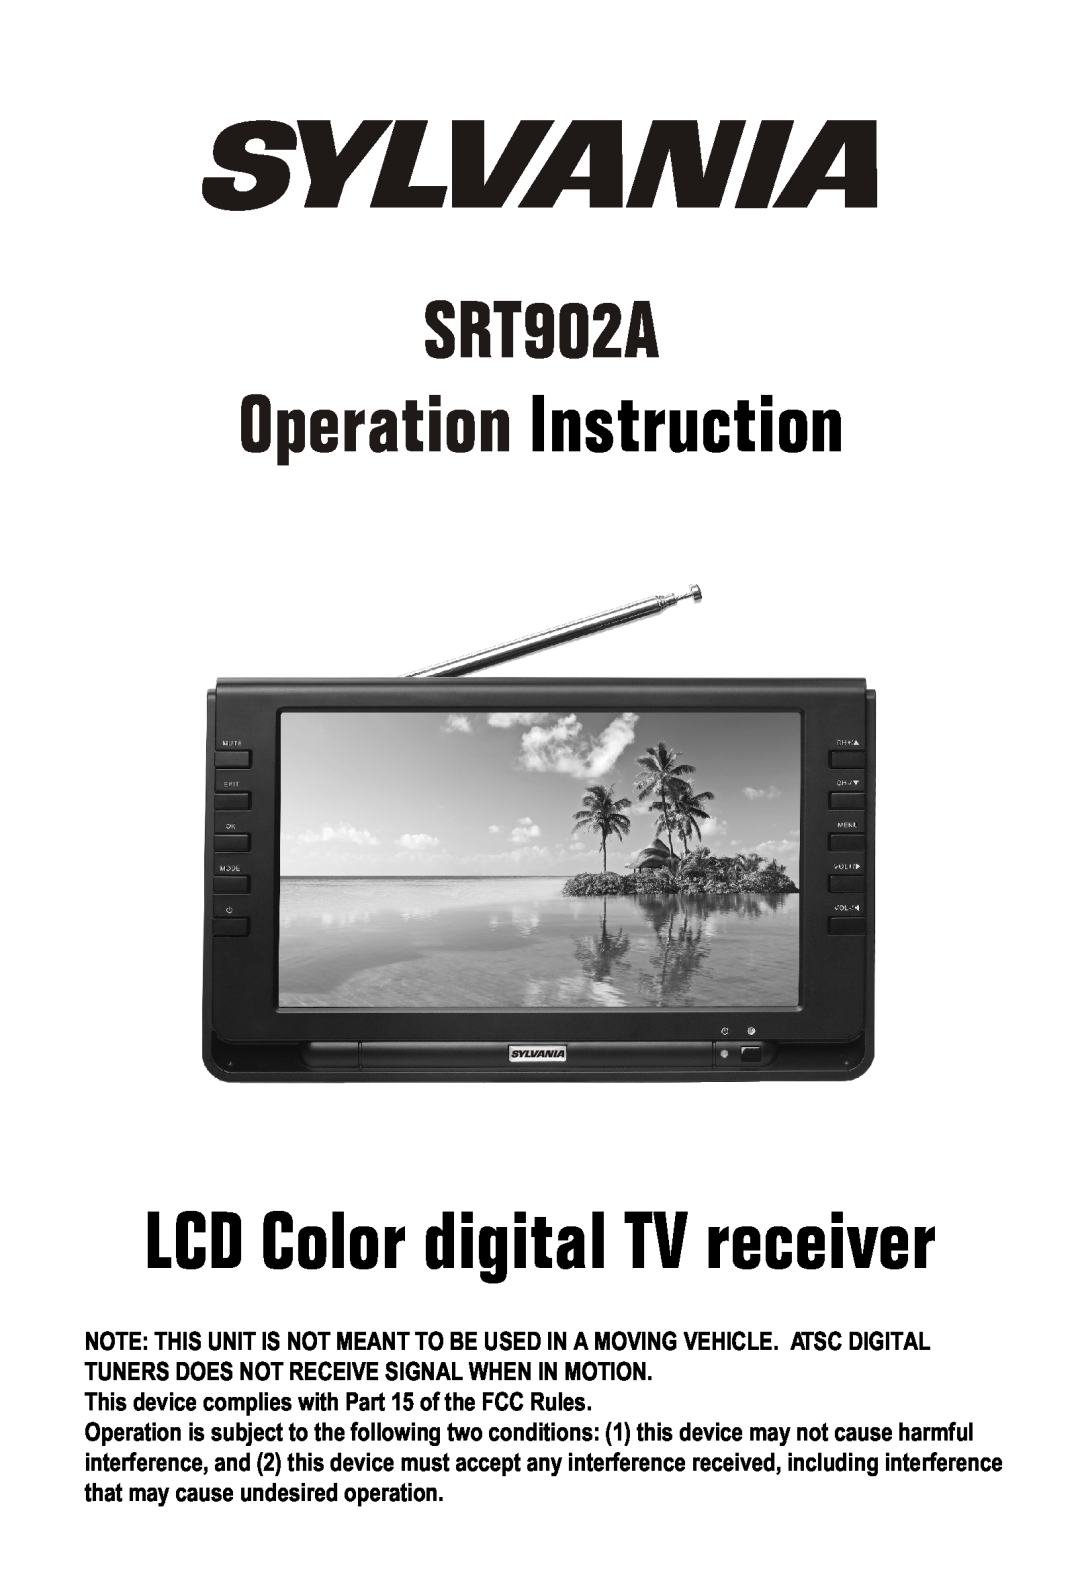 Sylvania SRT902A manual Operation Instruction, LCD Color digital TV receiver 